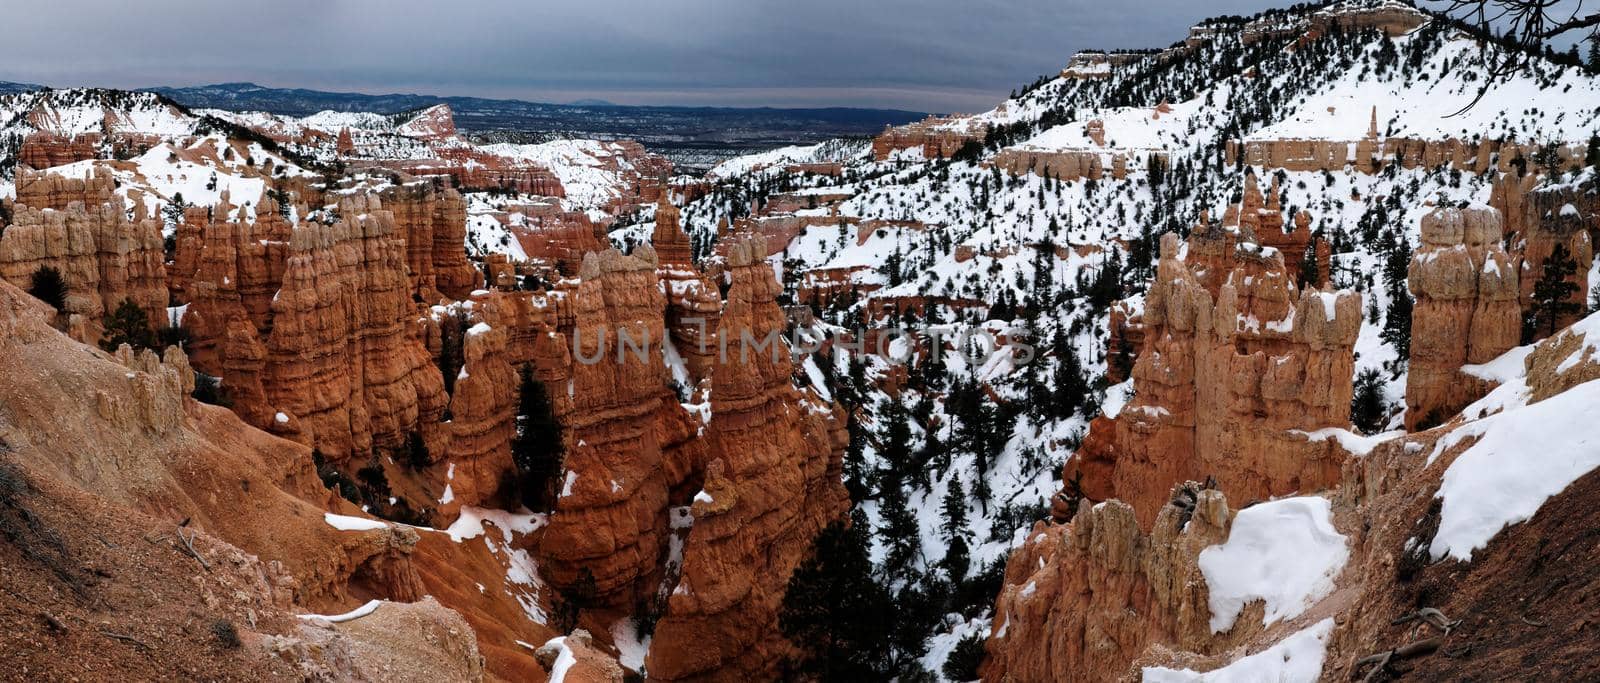 Bryce canyon panorama in winter. Utah, USA by slavapolo